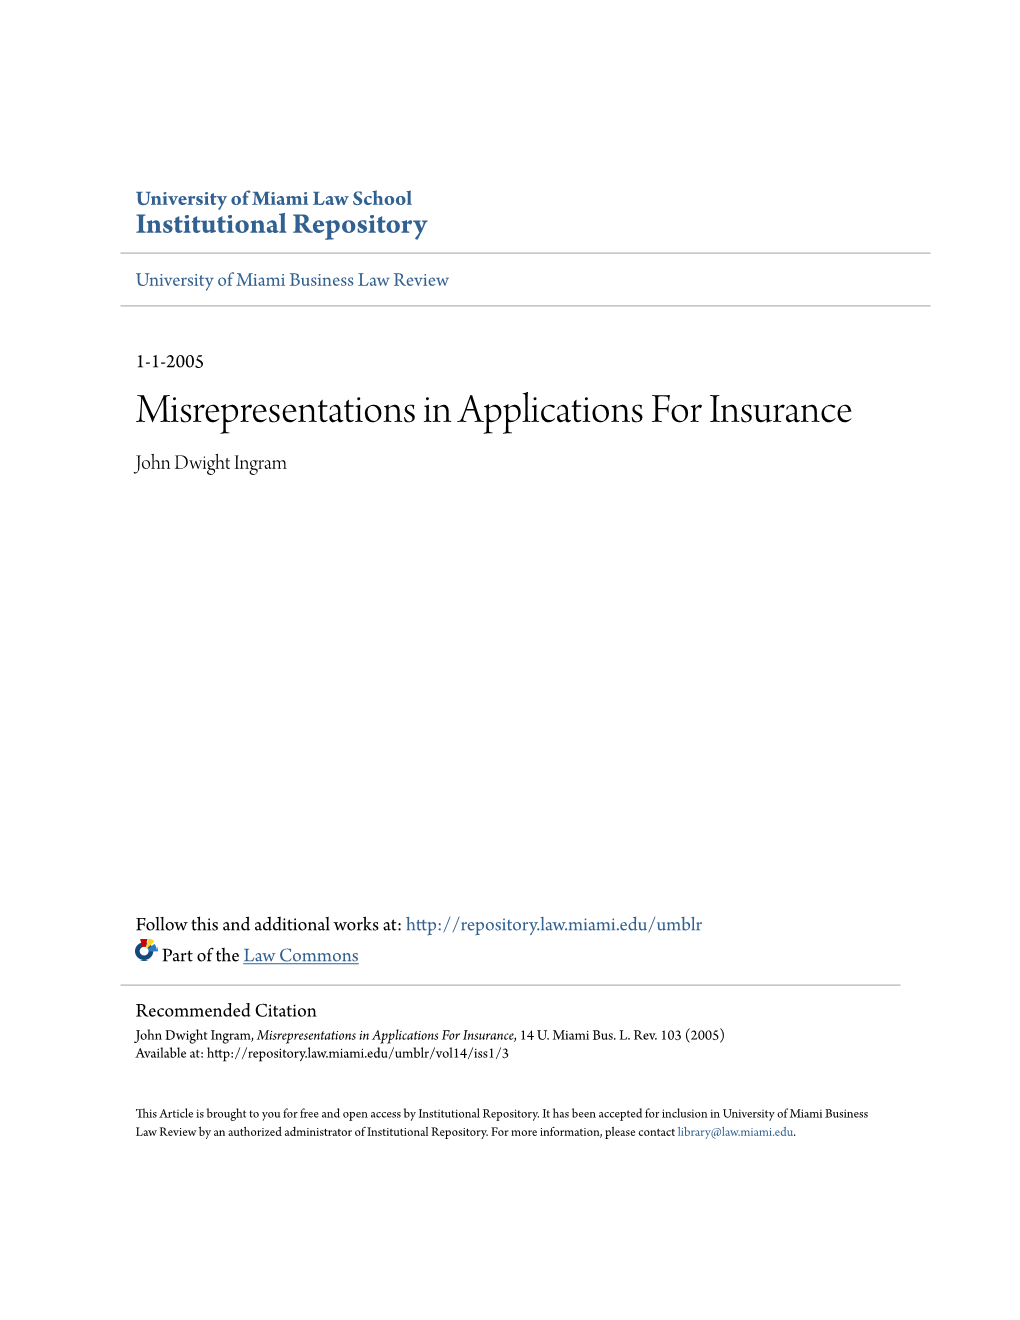 Misrepresentations in Applications for Insurance John Dwight Ingram